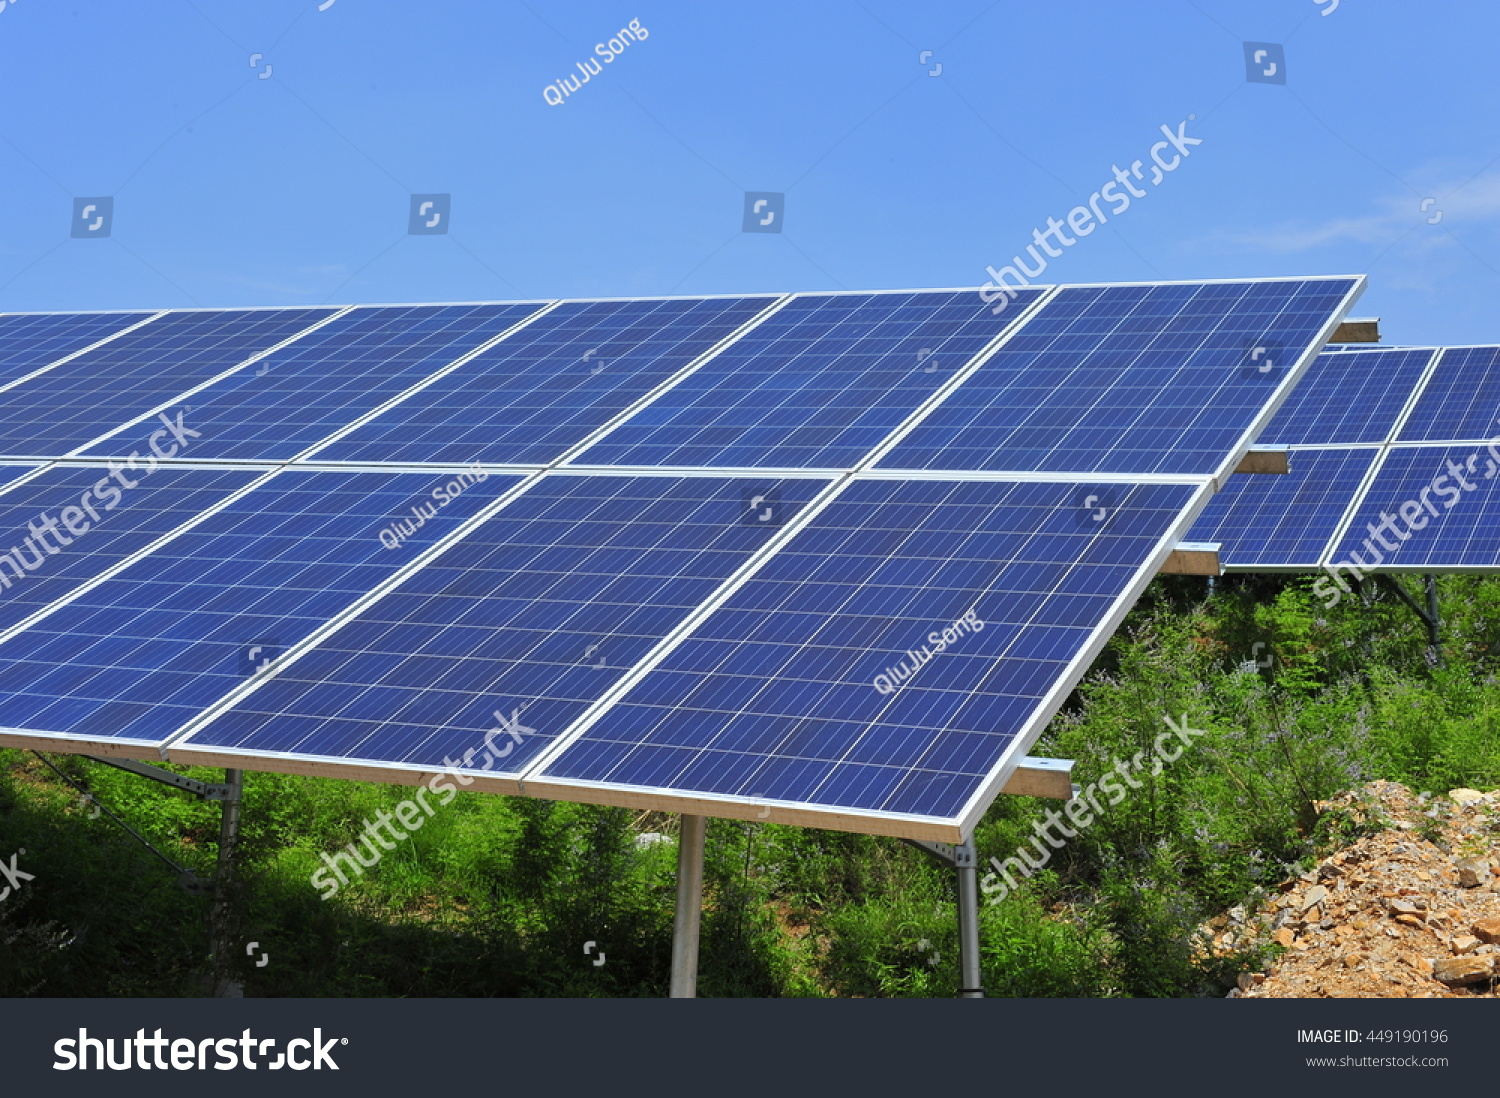 Solar Power Equipment Stock Photo 449190196 : Shutterstock